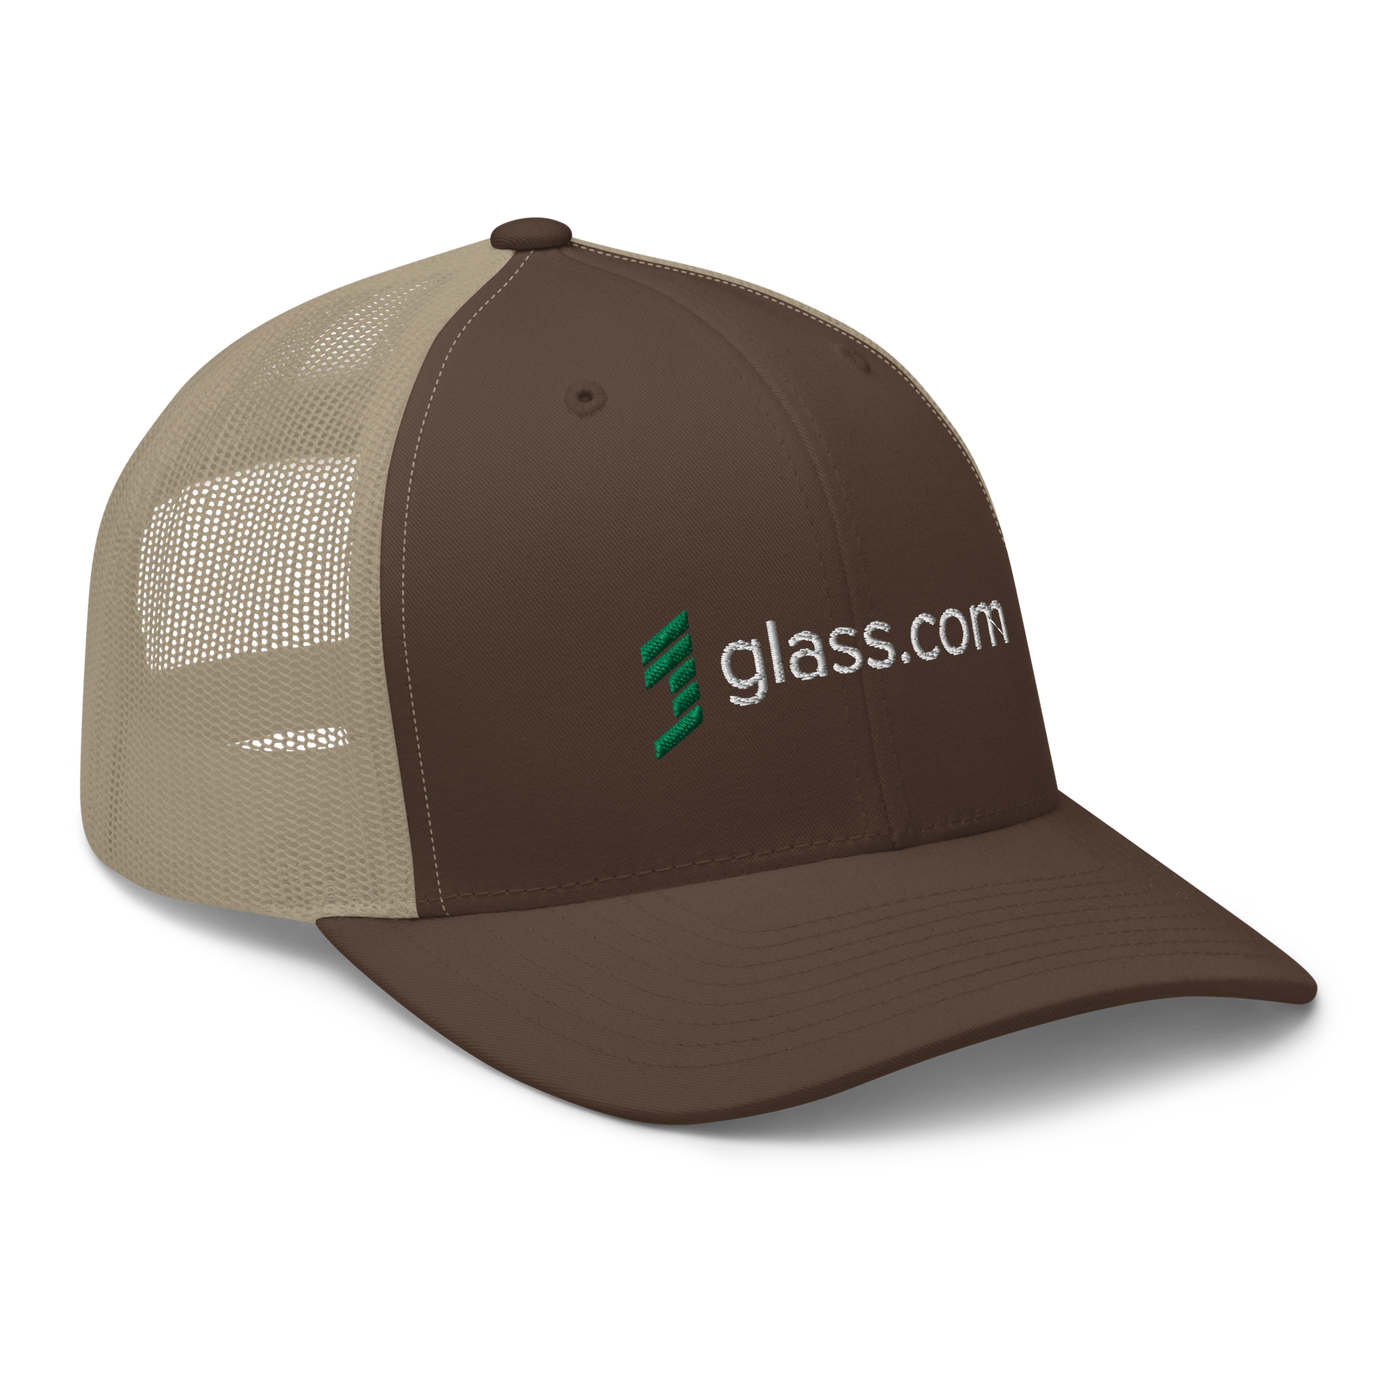 Glass.com Trucker Cap